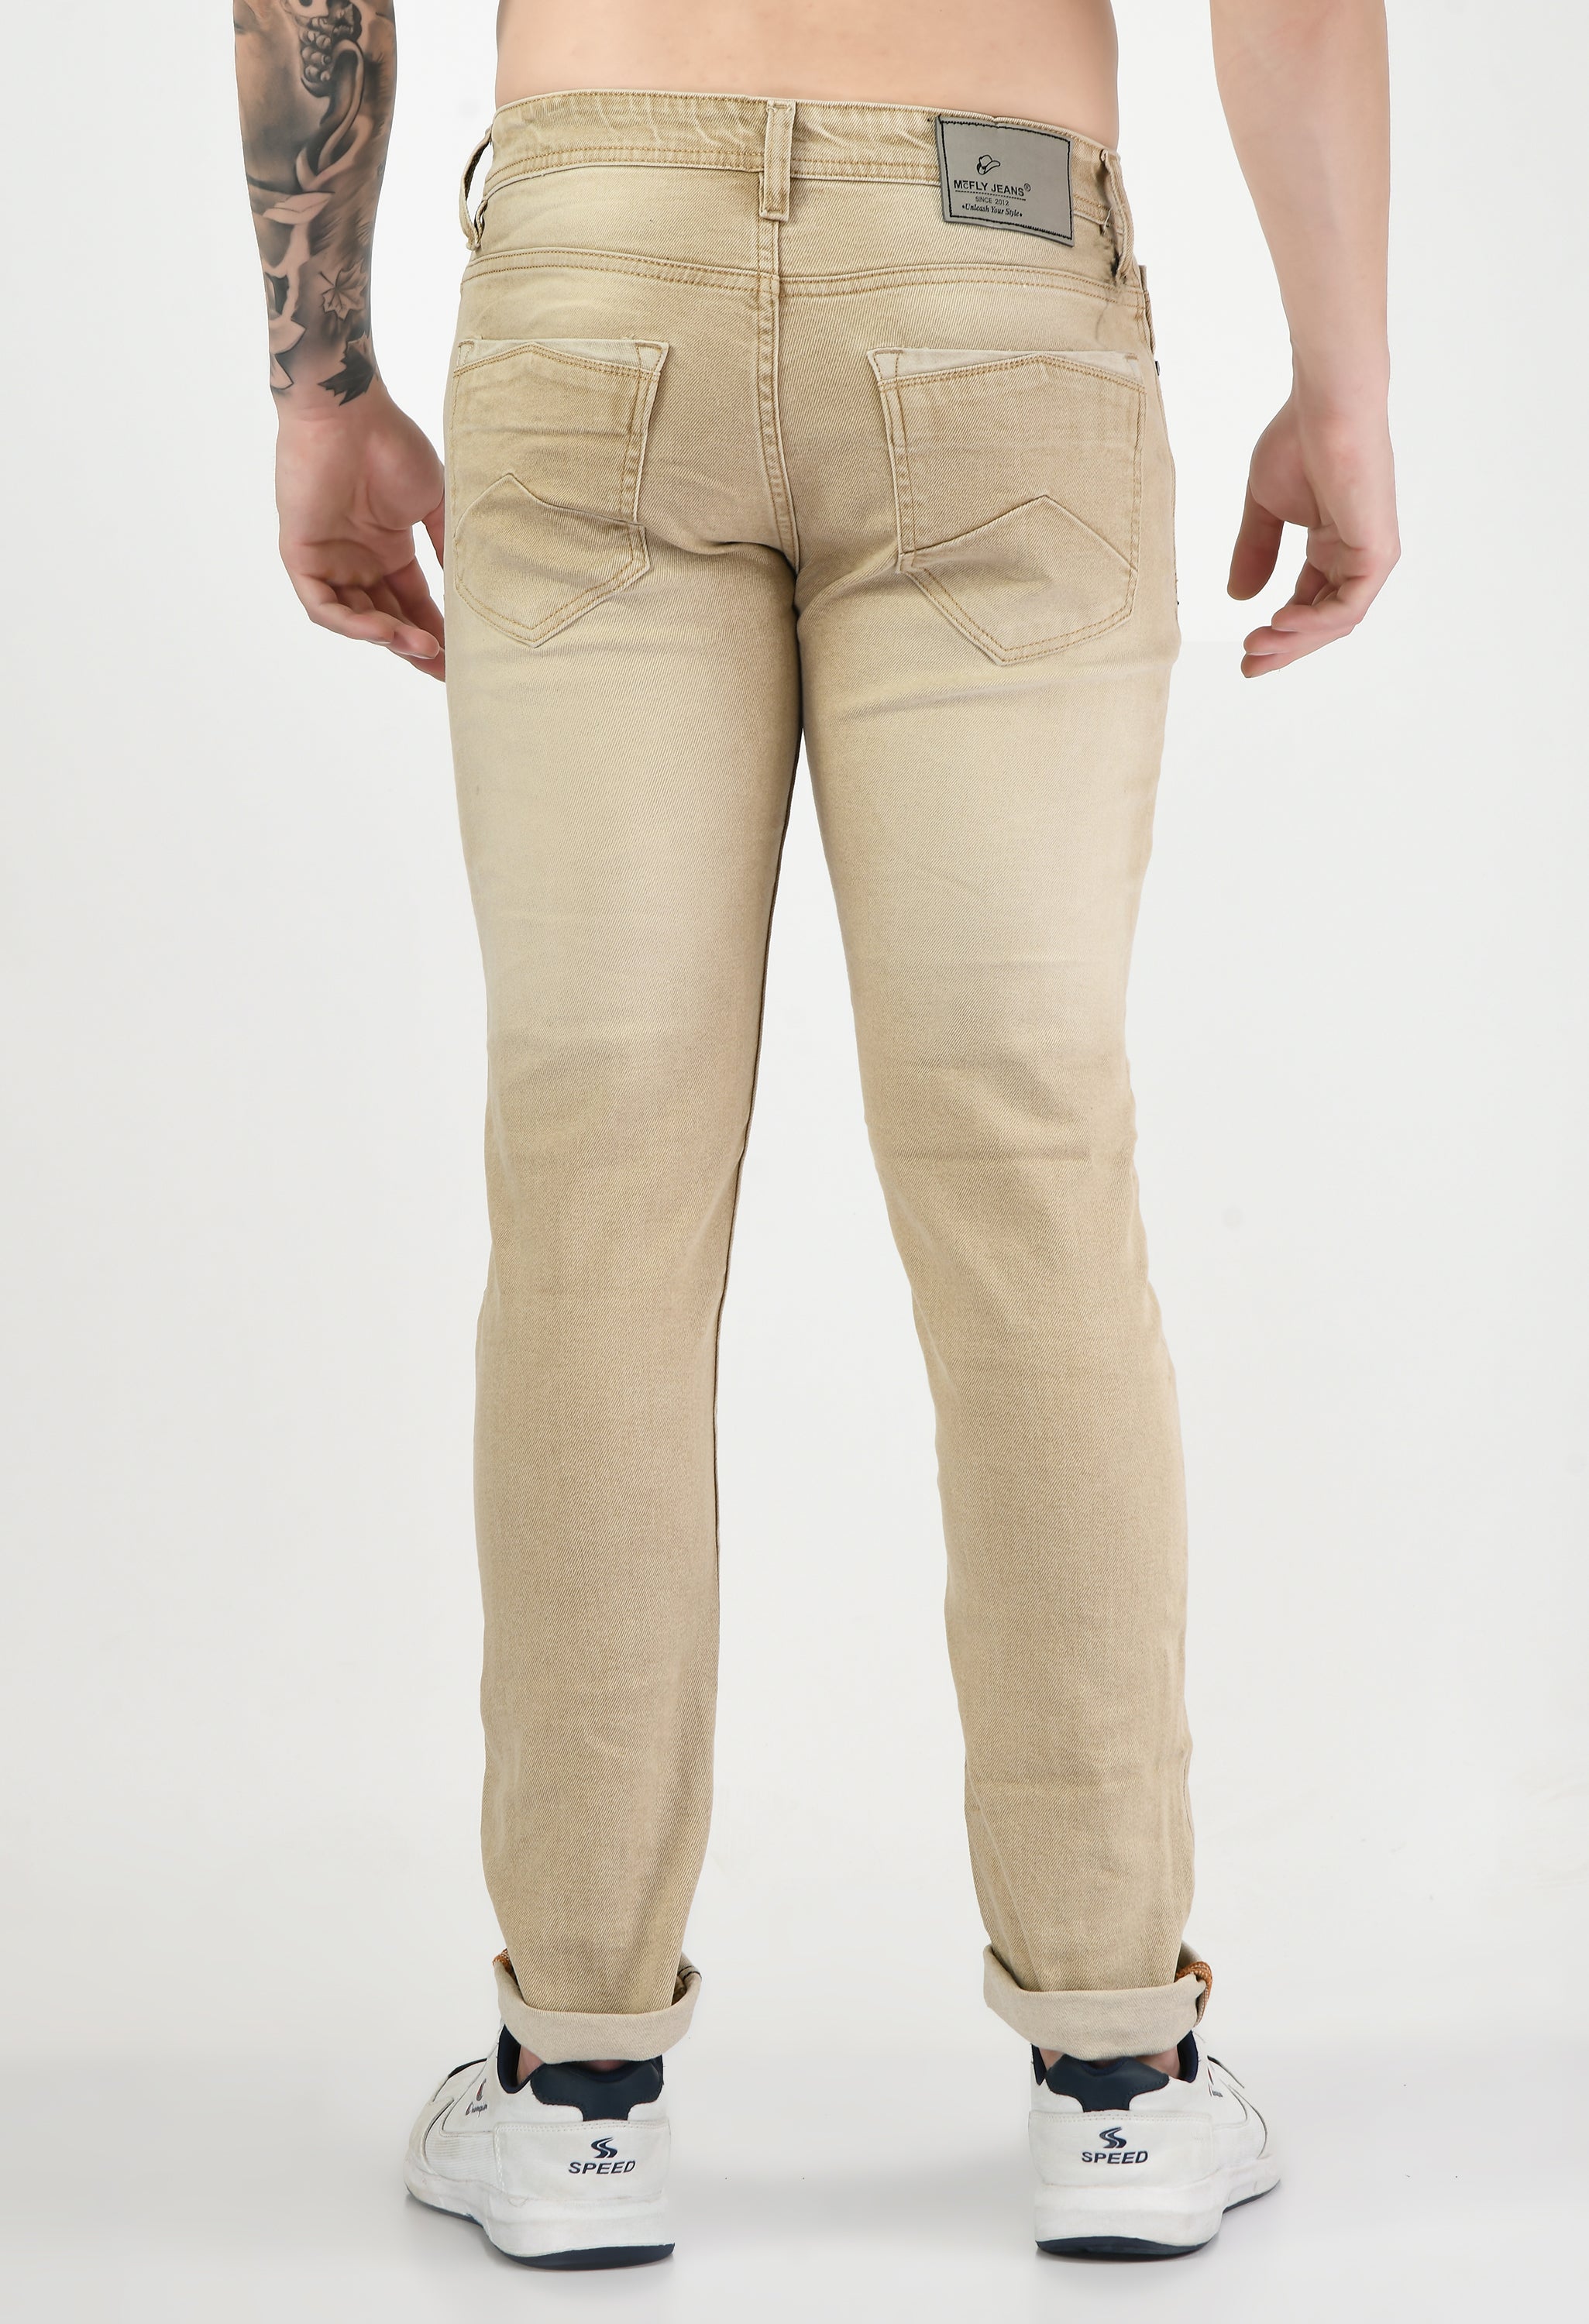 Beige Denim Slim Fit Jeans for Men - SQUIREHOOD